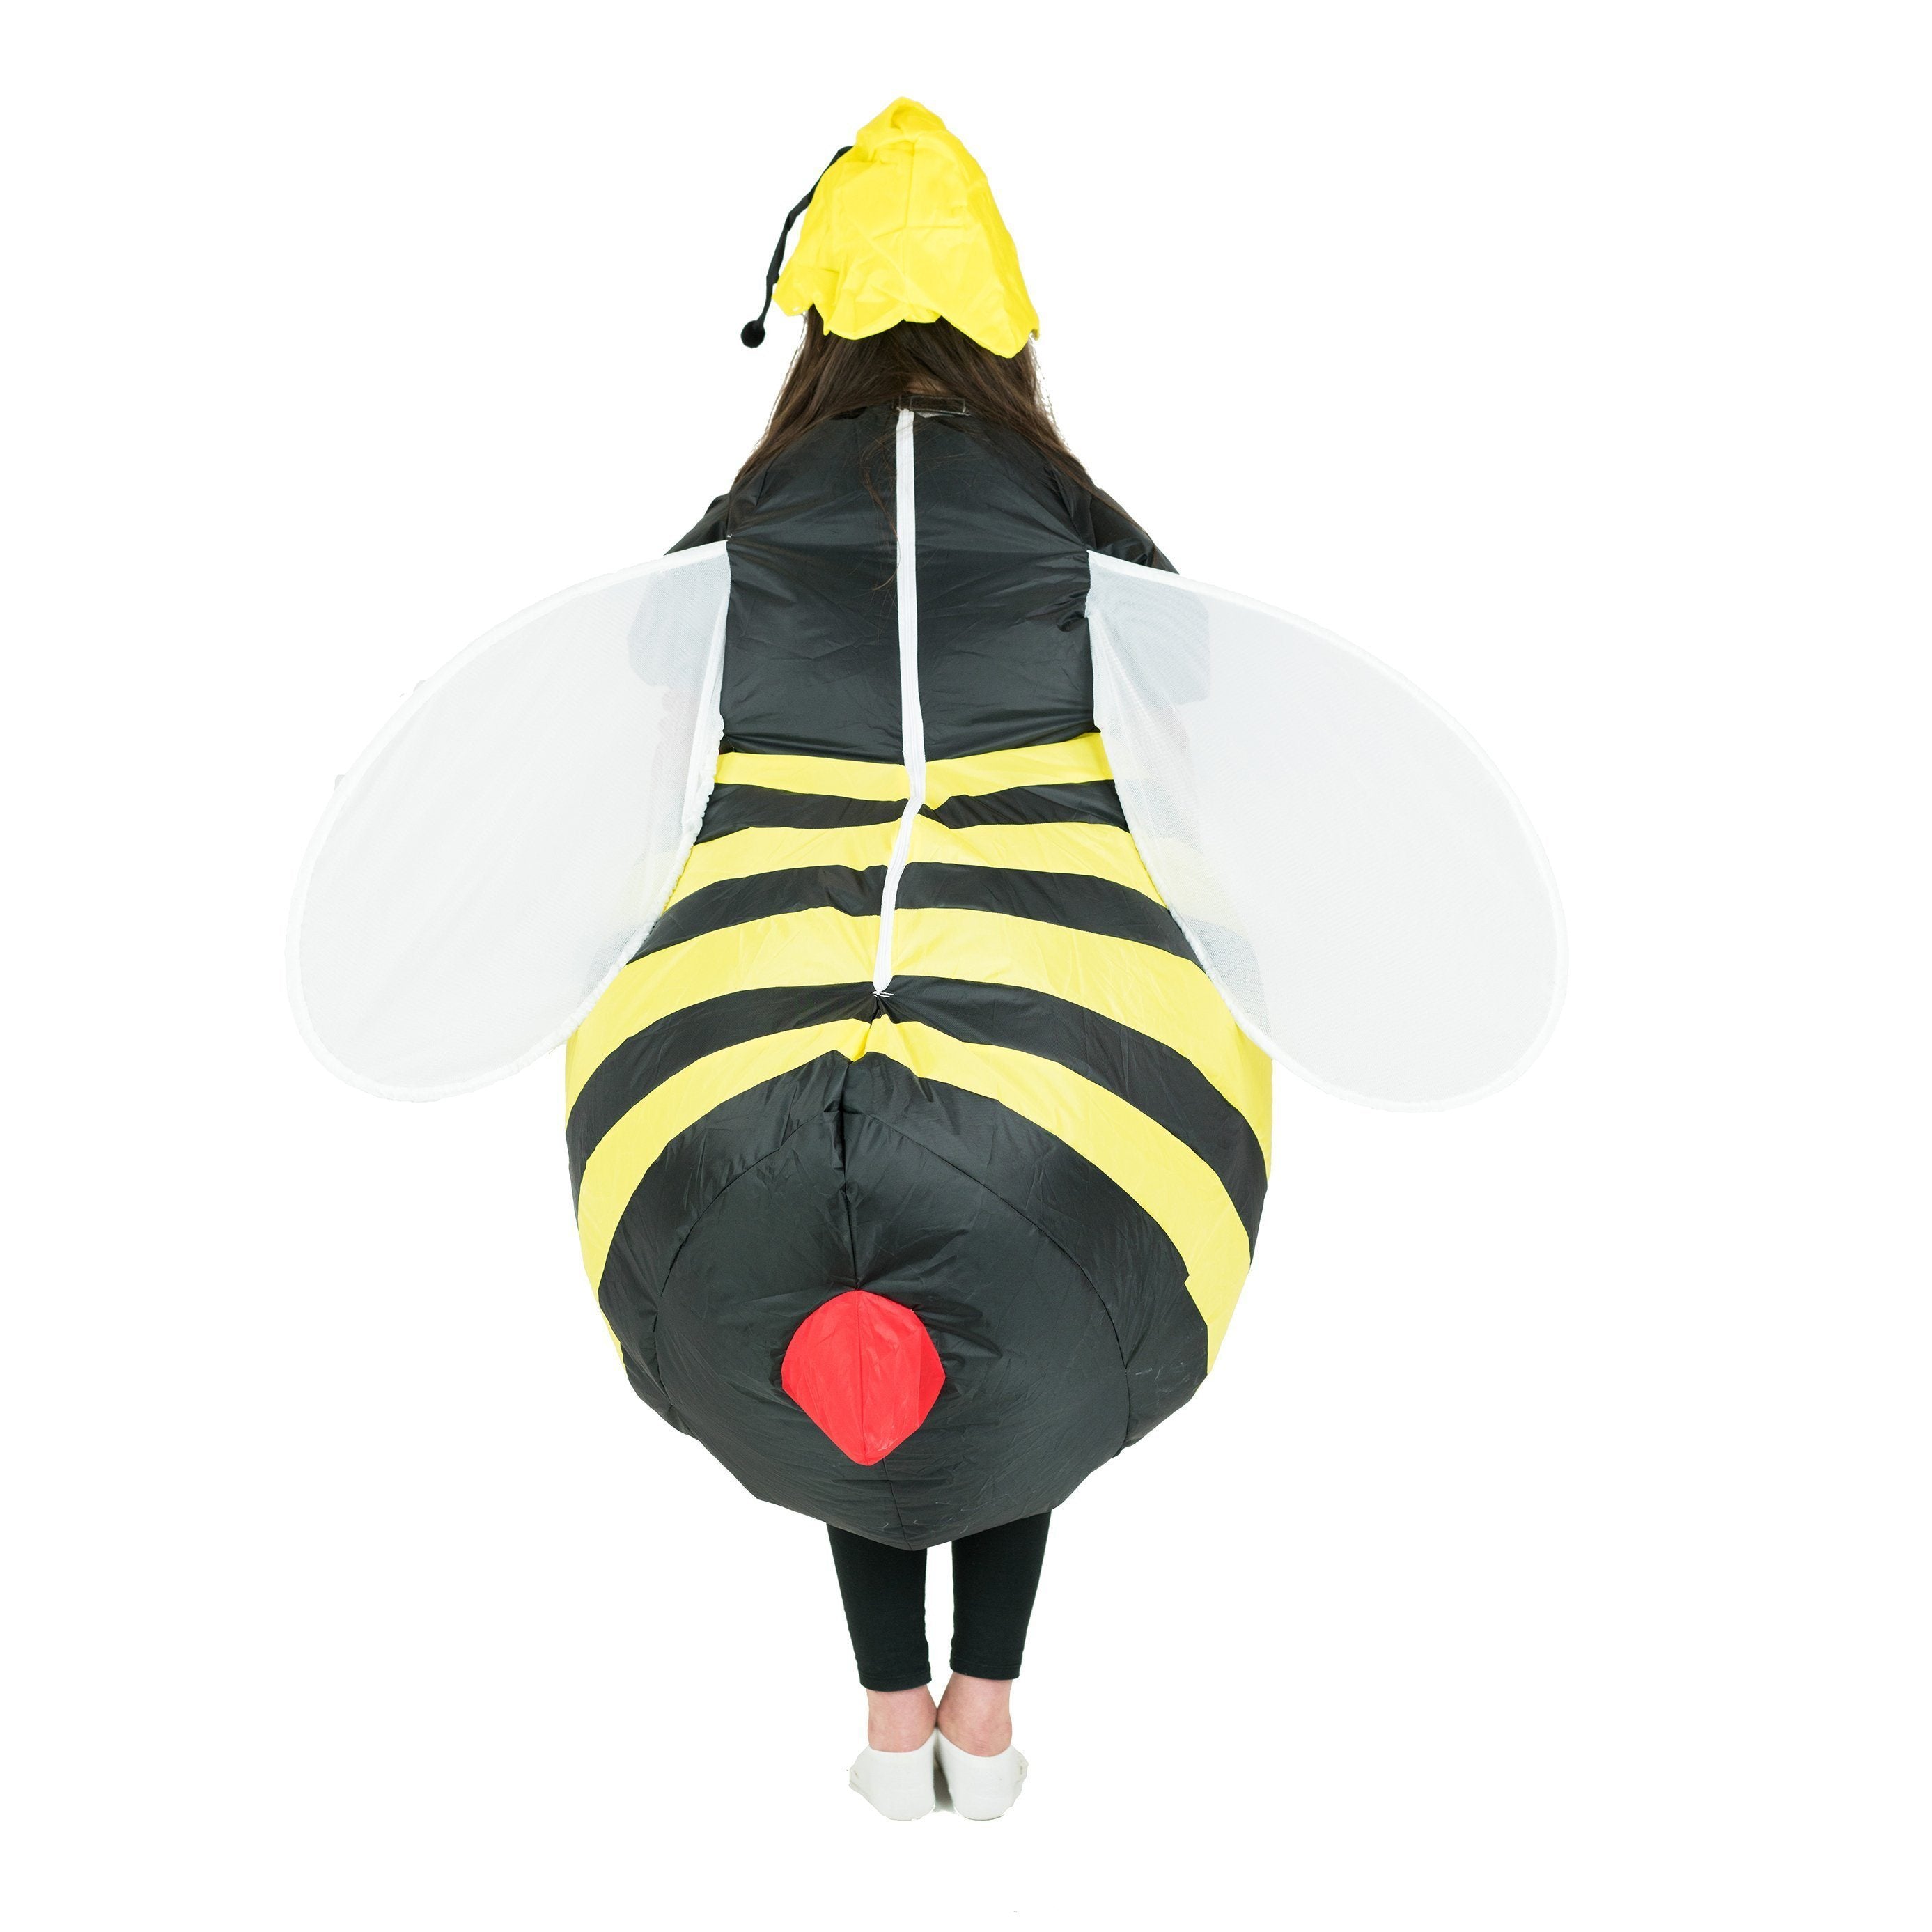 Fancy Dress - Kids Inflatable Bee Costume